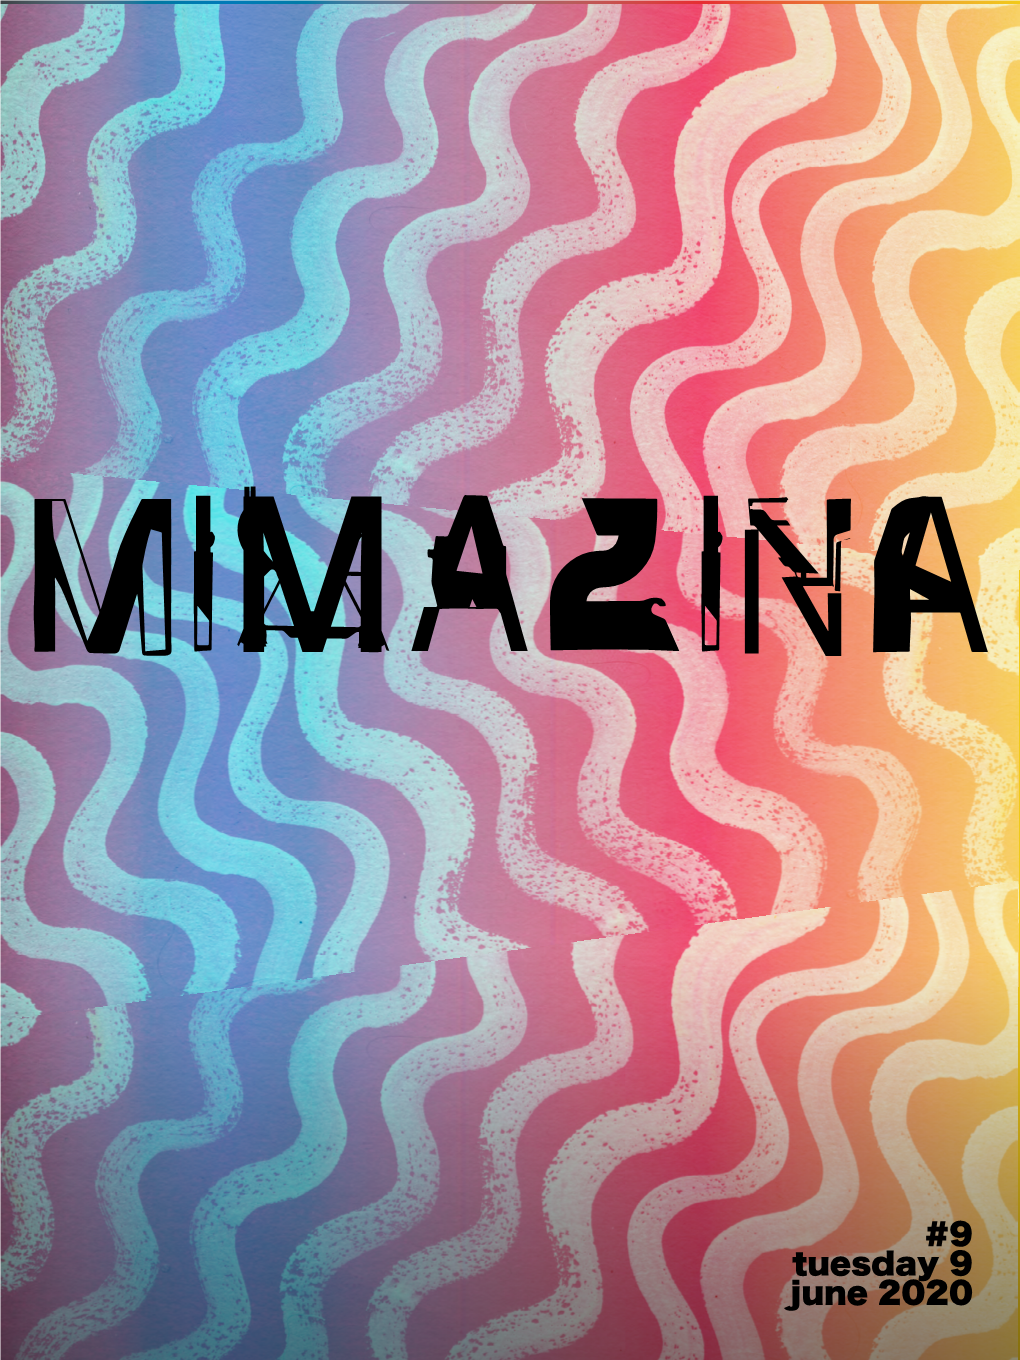 9 Tuesday 9 June 2020 MIMAZINA #9